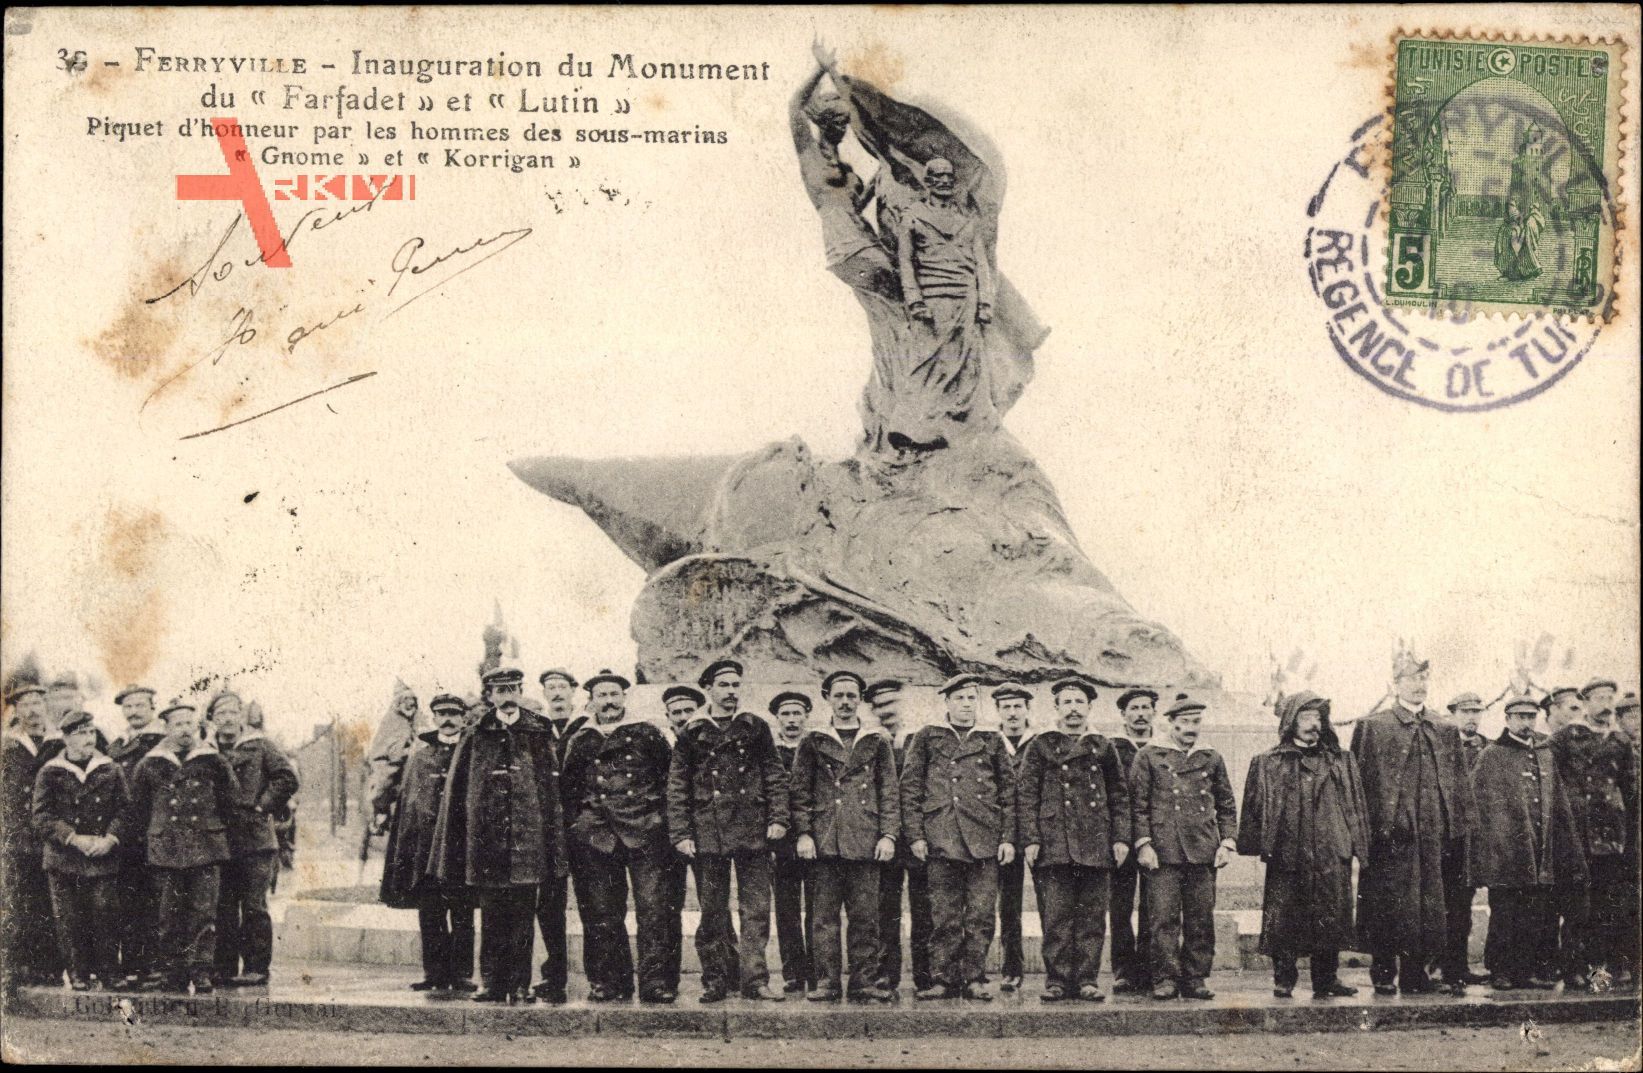 Ferryville Tunesien, Inauguration du Monument du Farfadet et Lutin